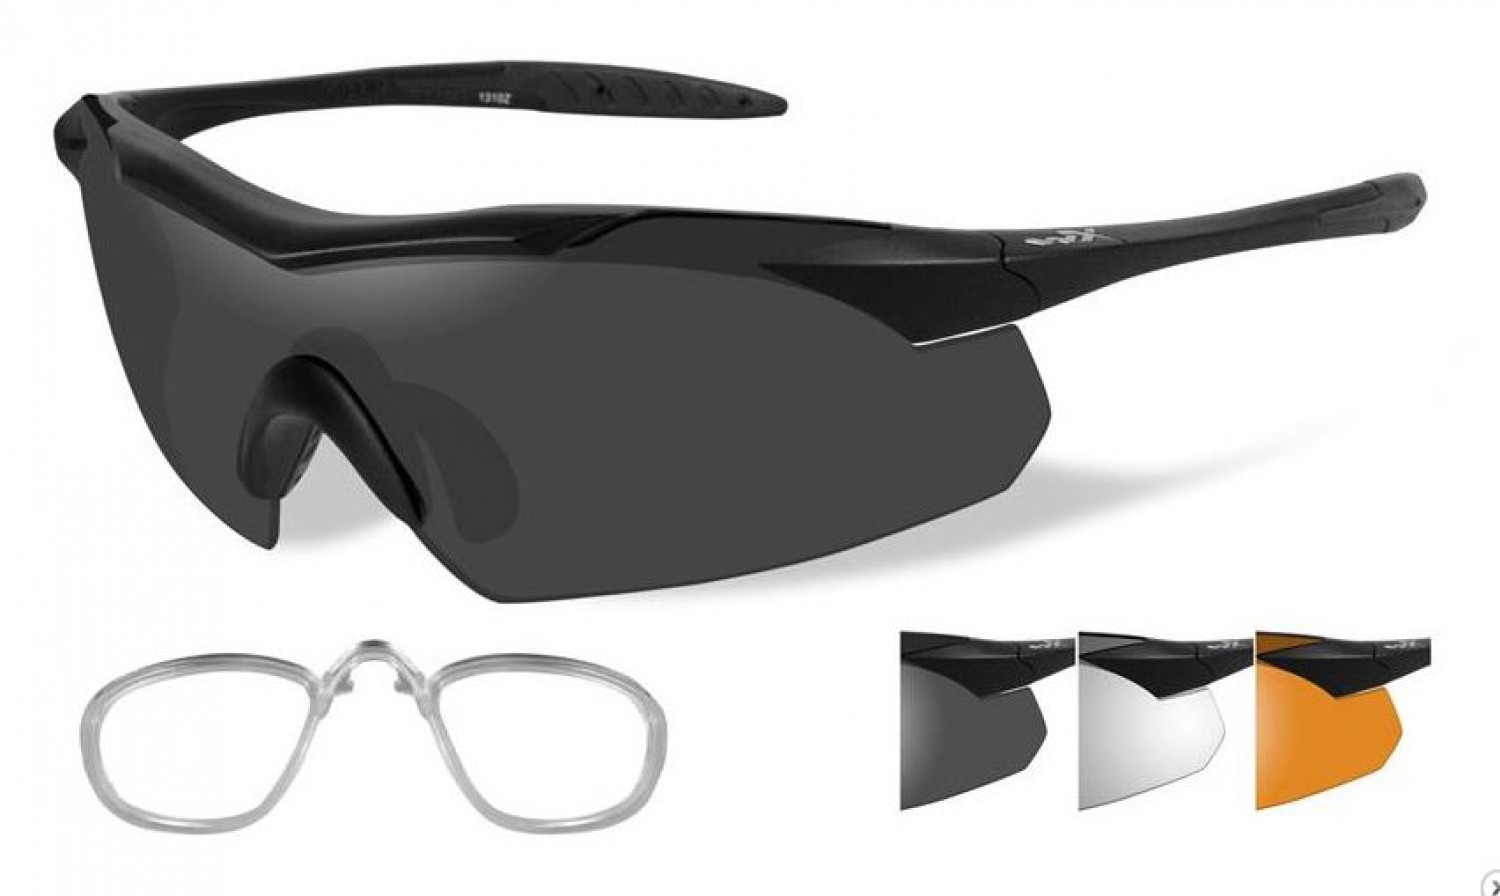 Wiley X Prescription Vapor Sunglasses Ads Sports Eyewear 